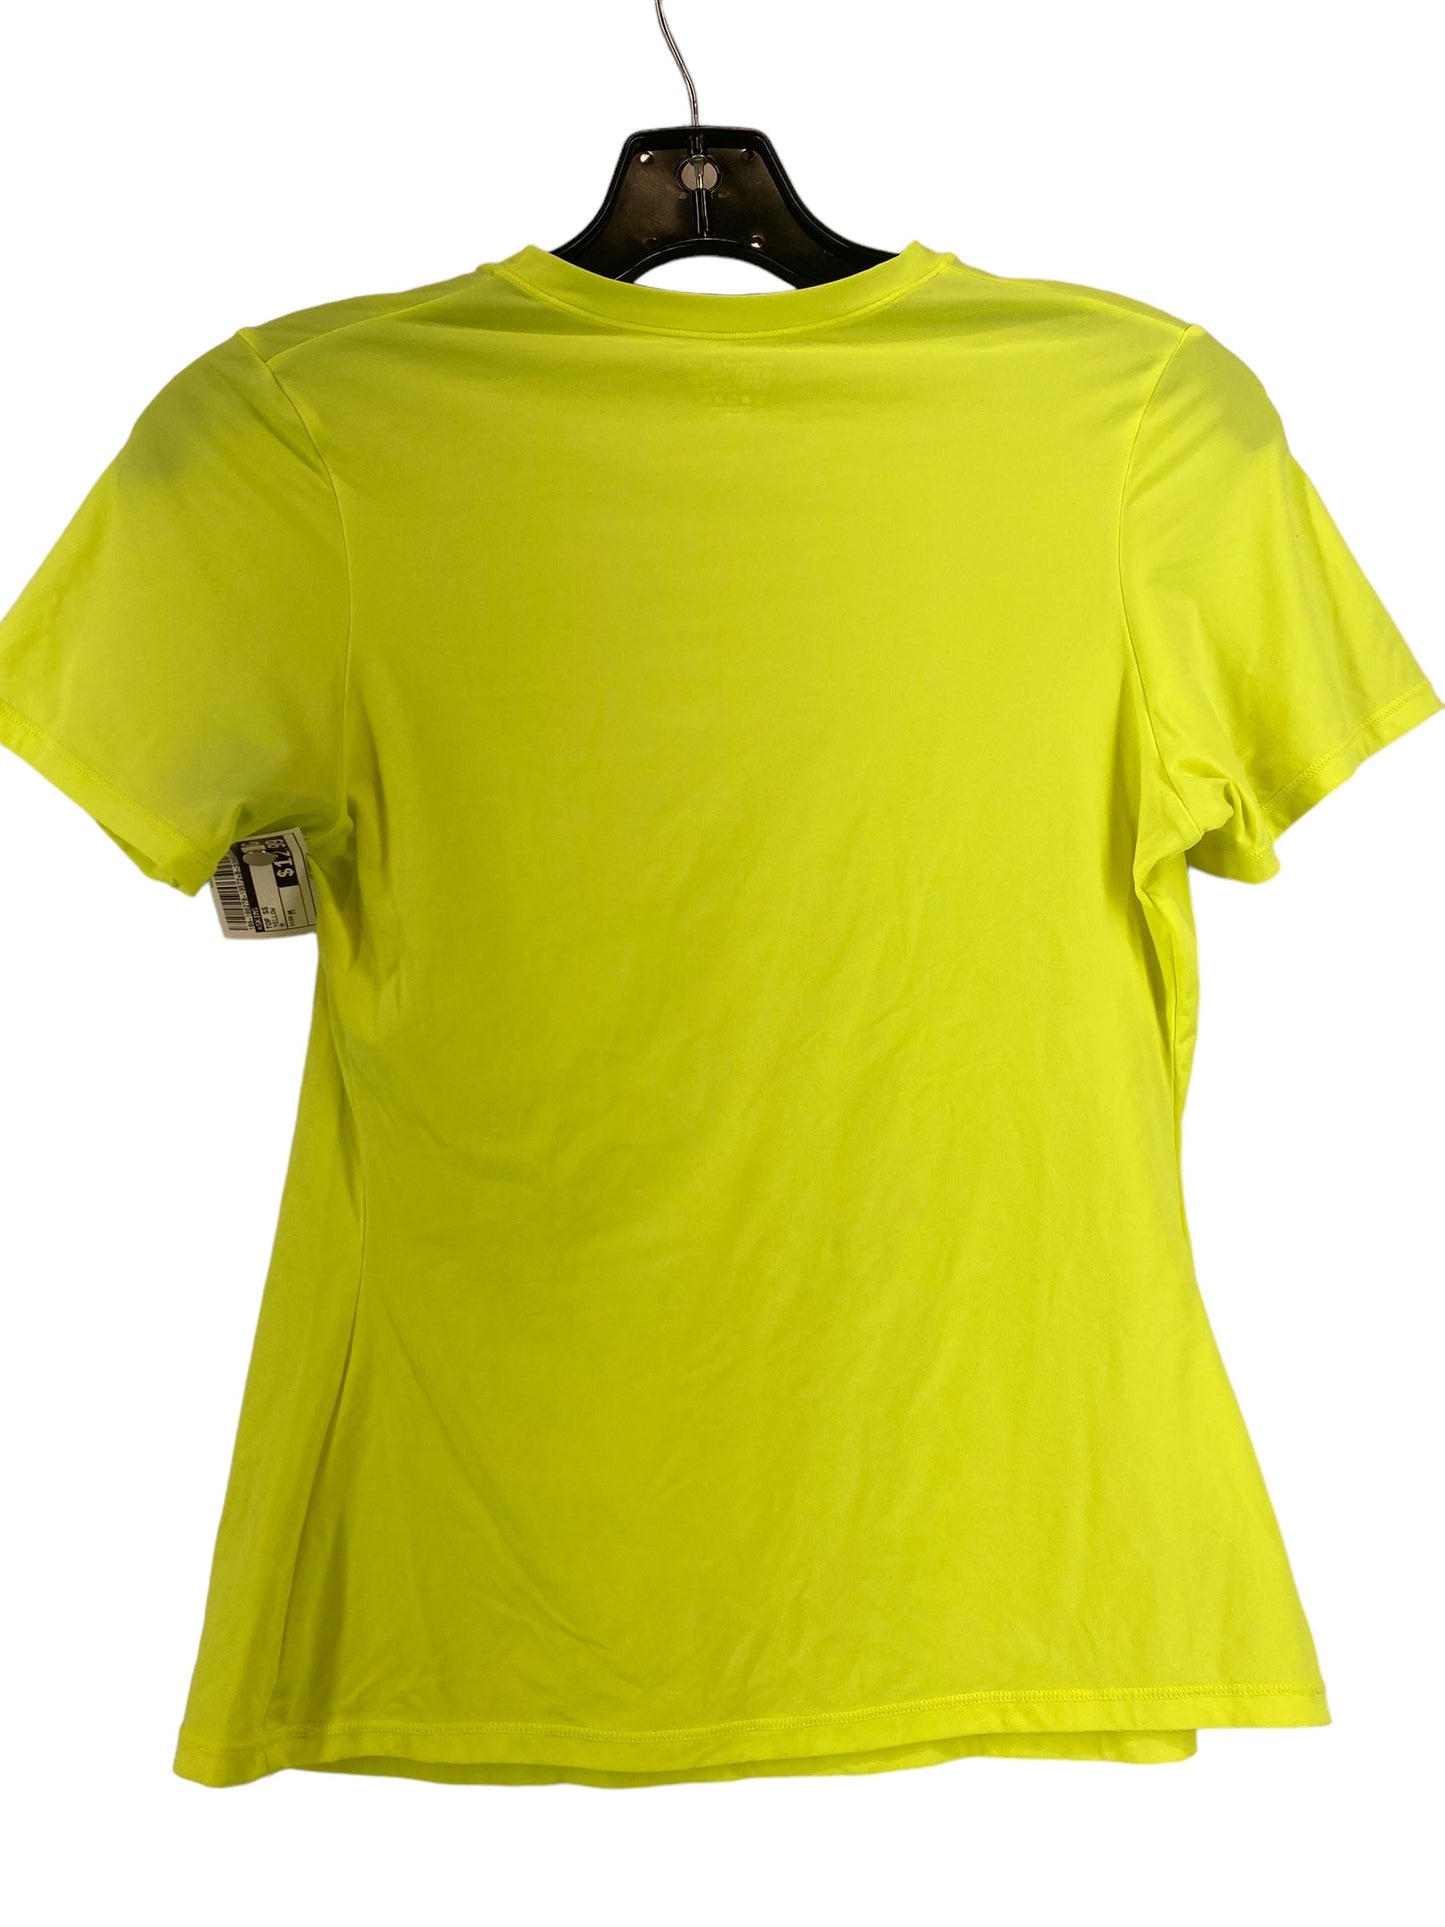 Yellow Top Short Sleeve Skims, Size M